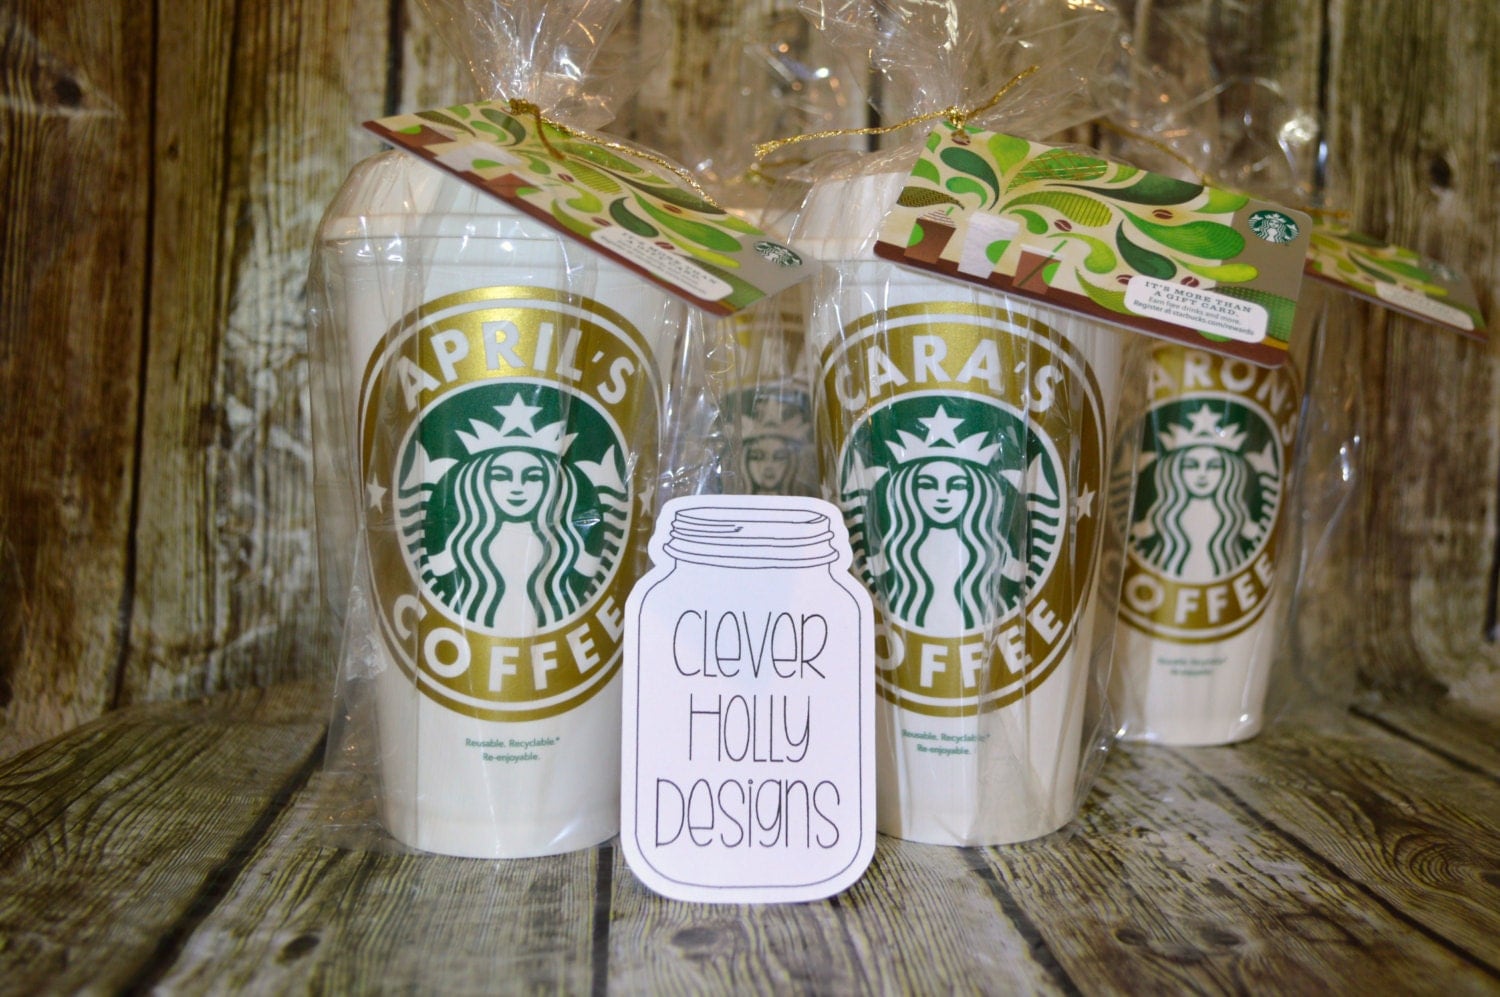 Starbucks Gift Card Designs